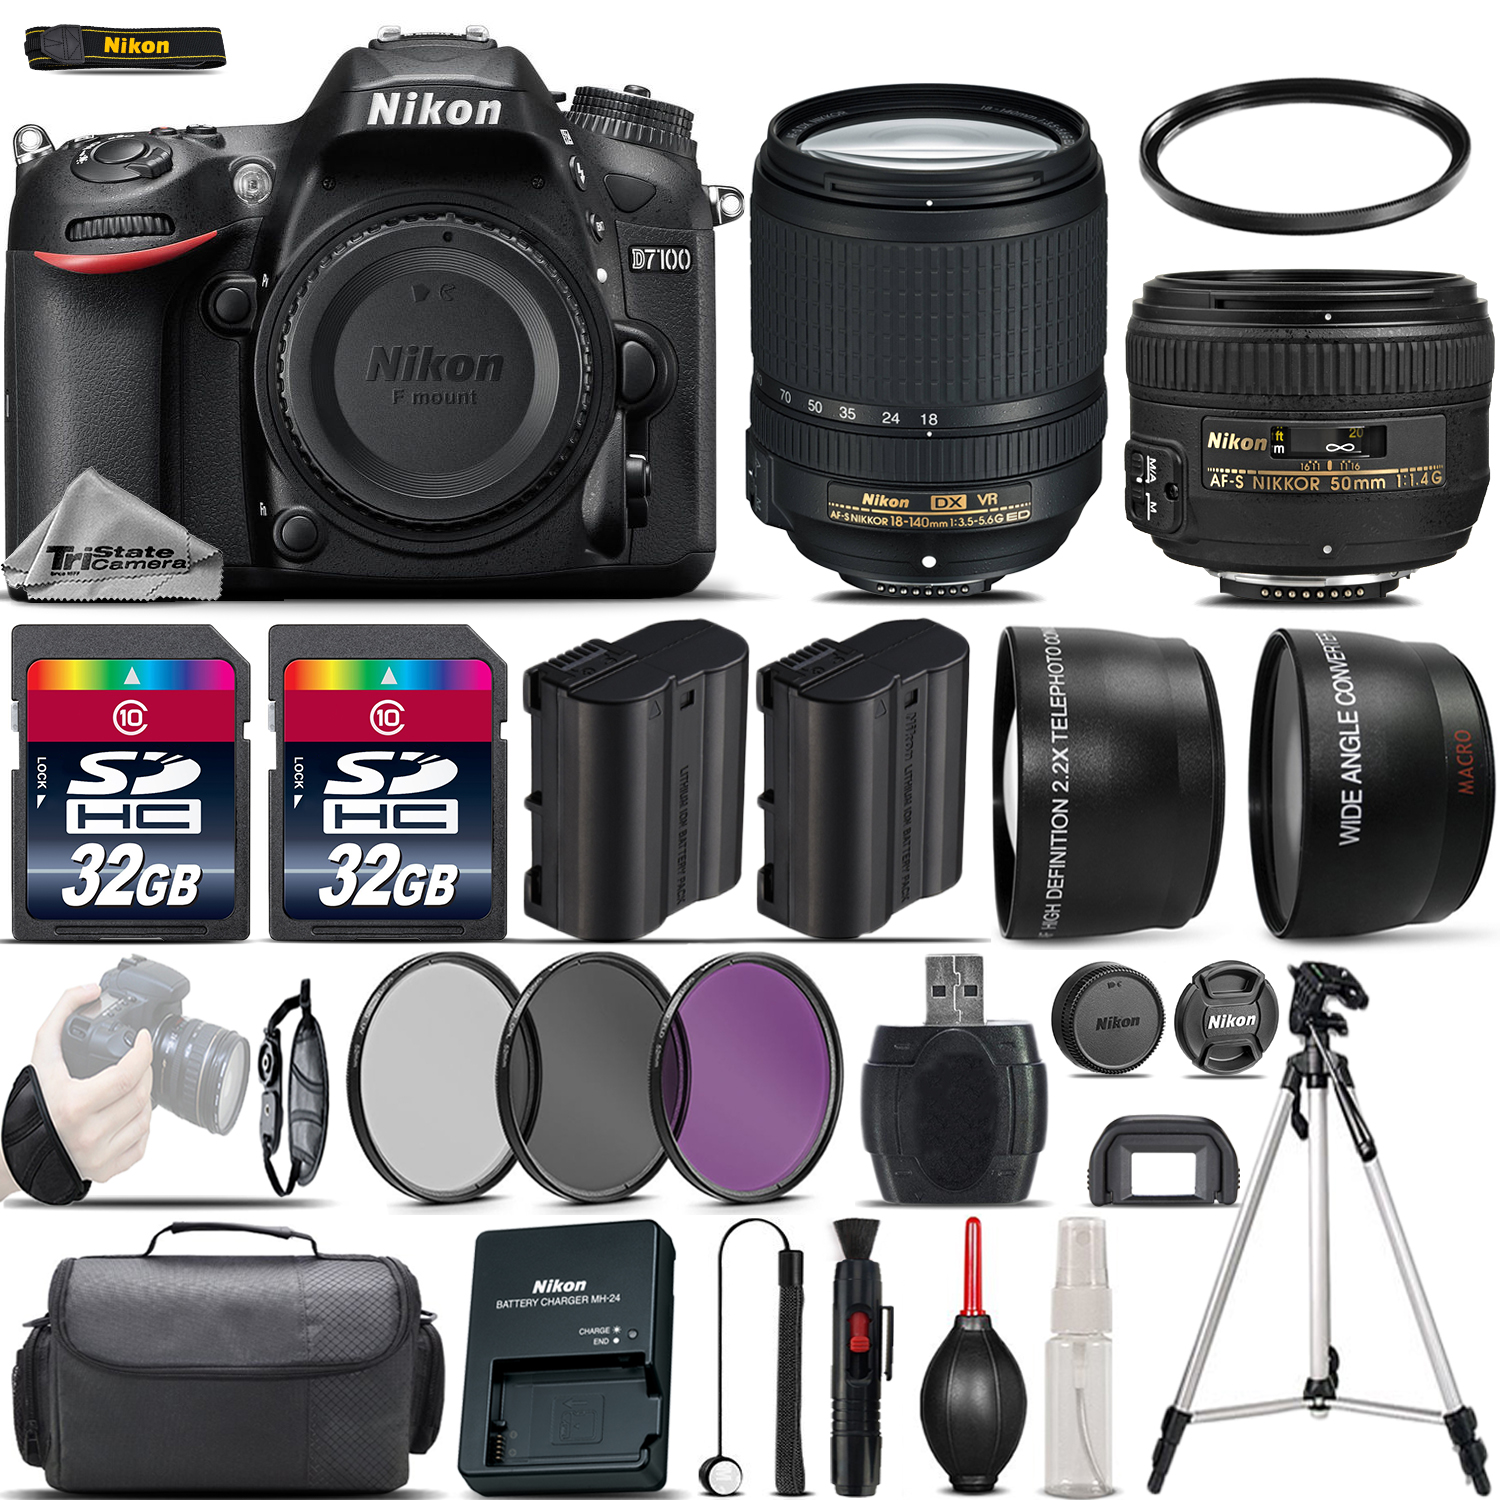 D7100 Digital SLR Camera + 18-140mm VR + 50mm 1.4G Lens + 64GB -4 Lens Kit *FREE SHIPPING*